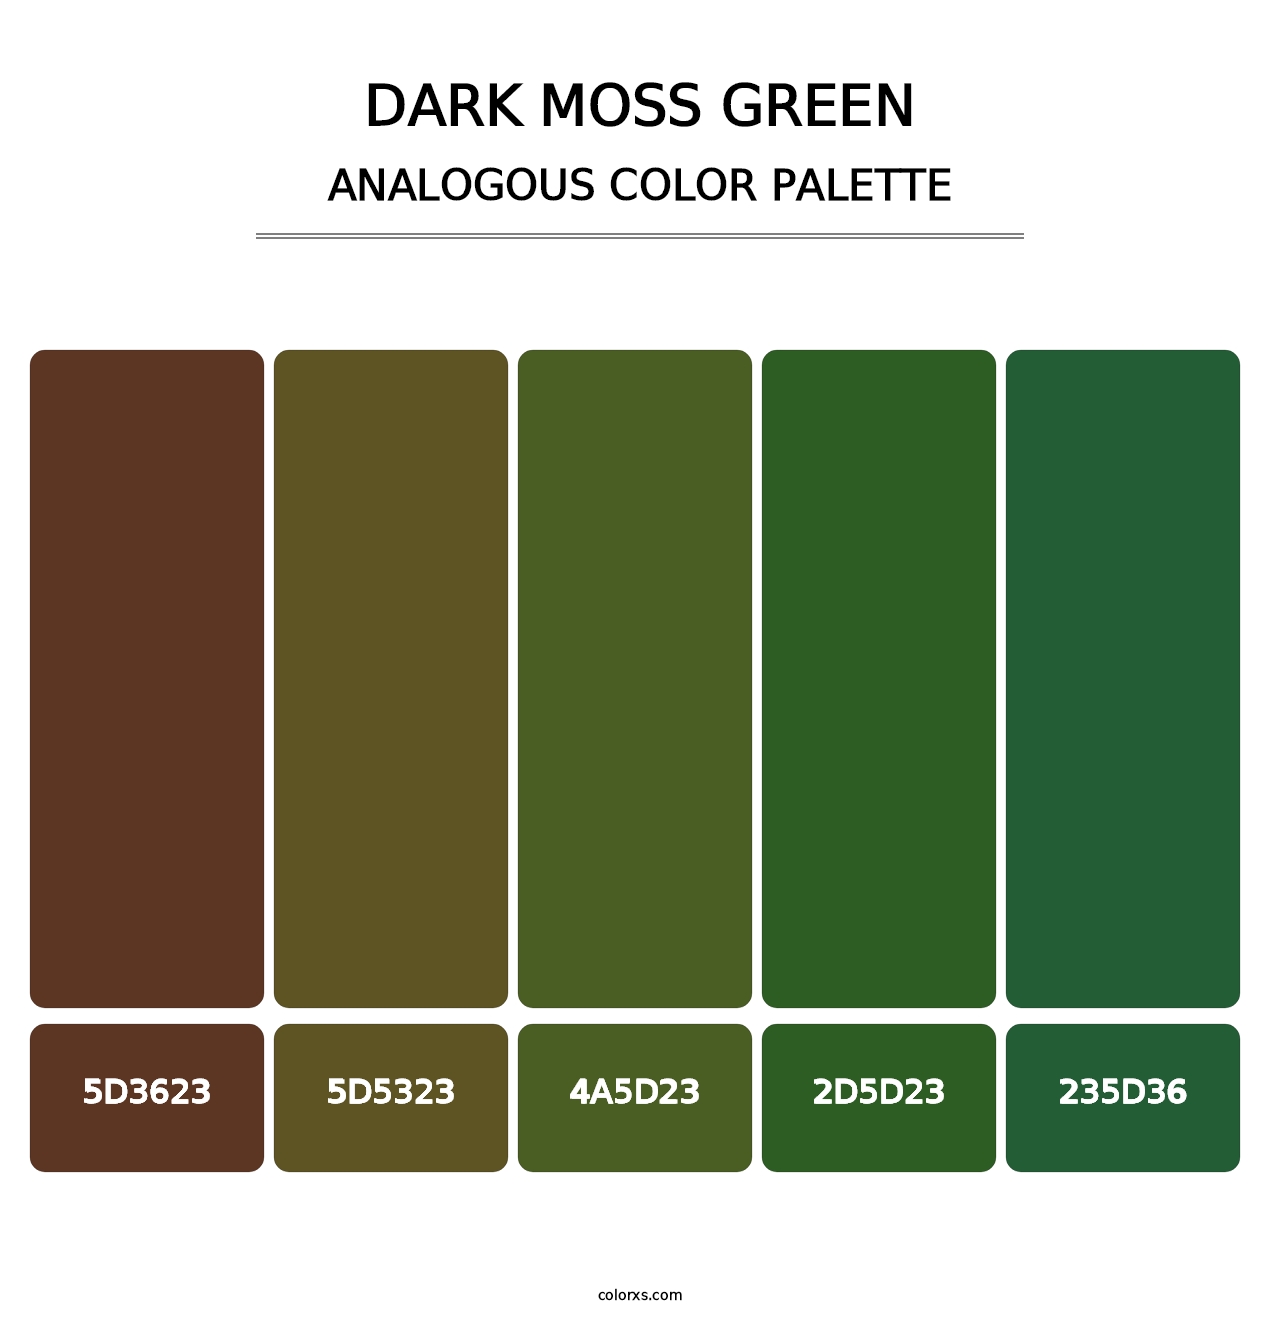 Dark Moss Green - Analogous Color Palette